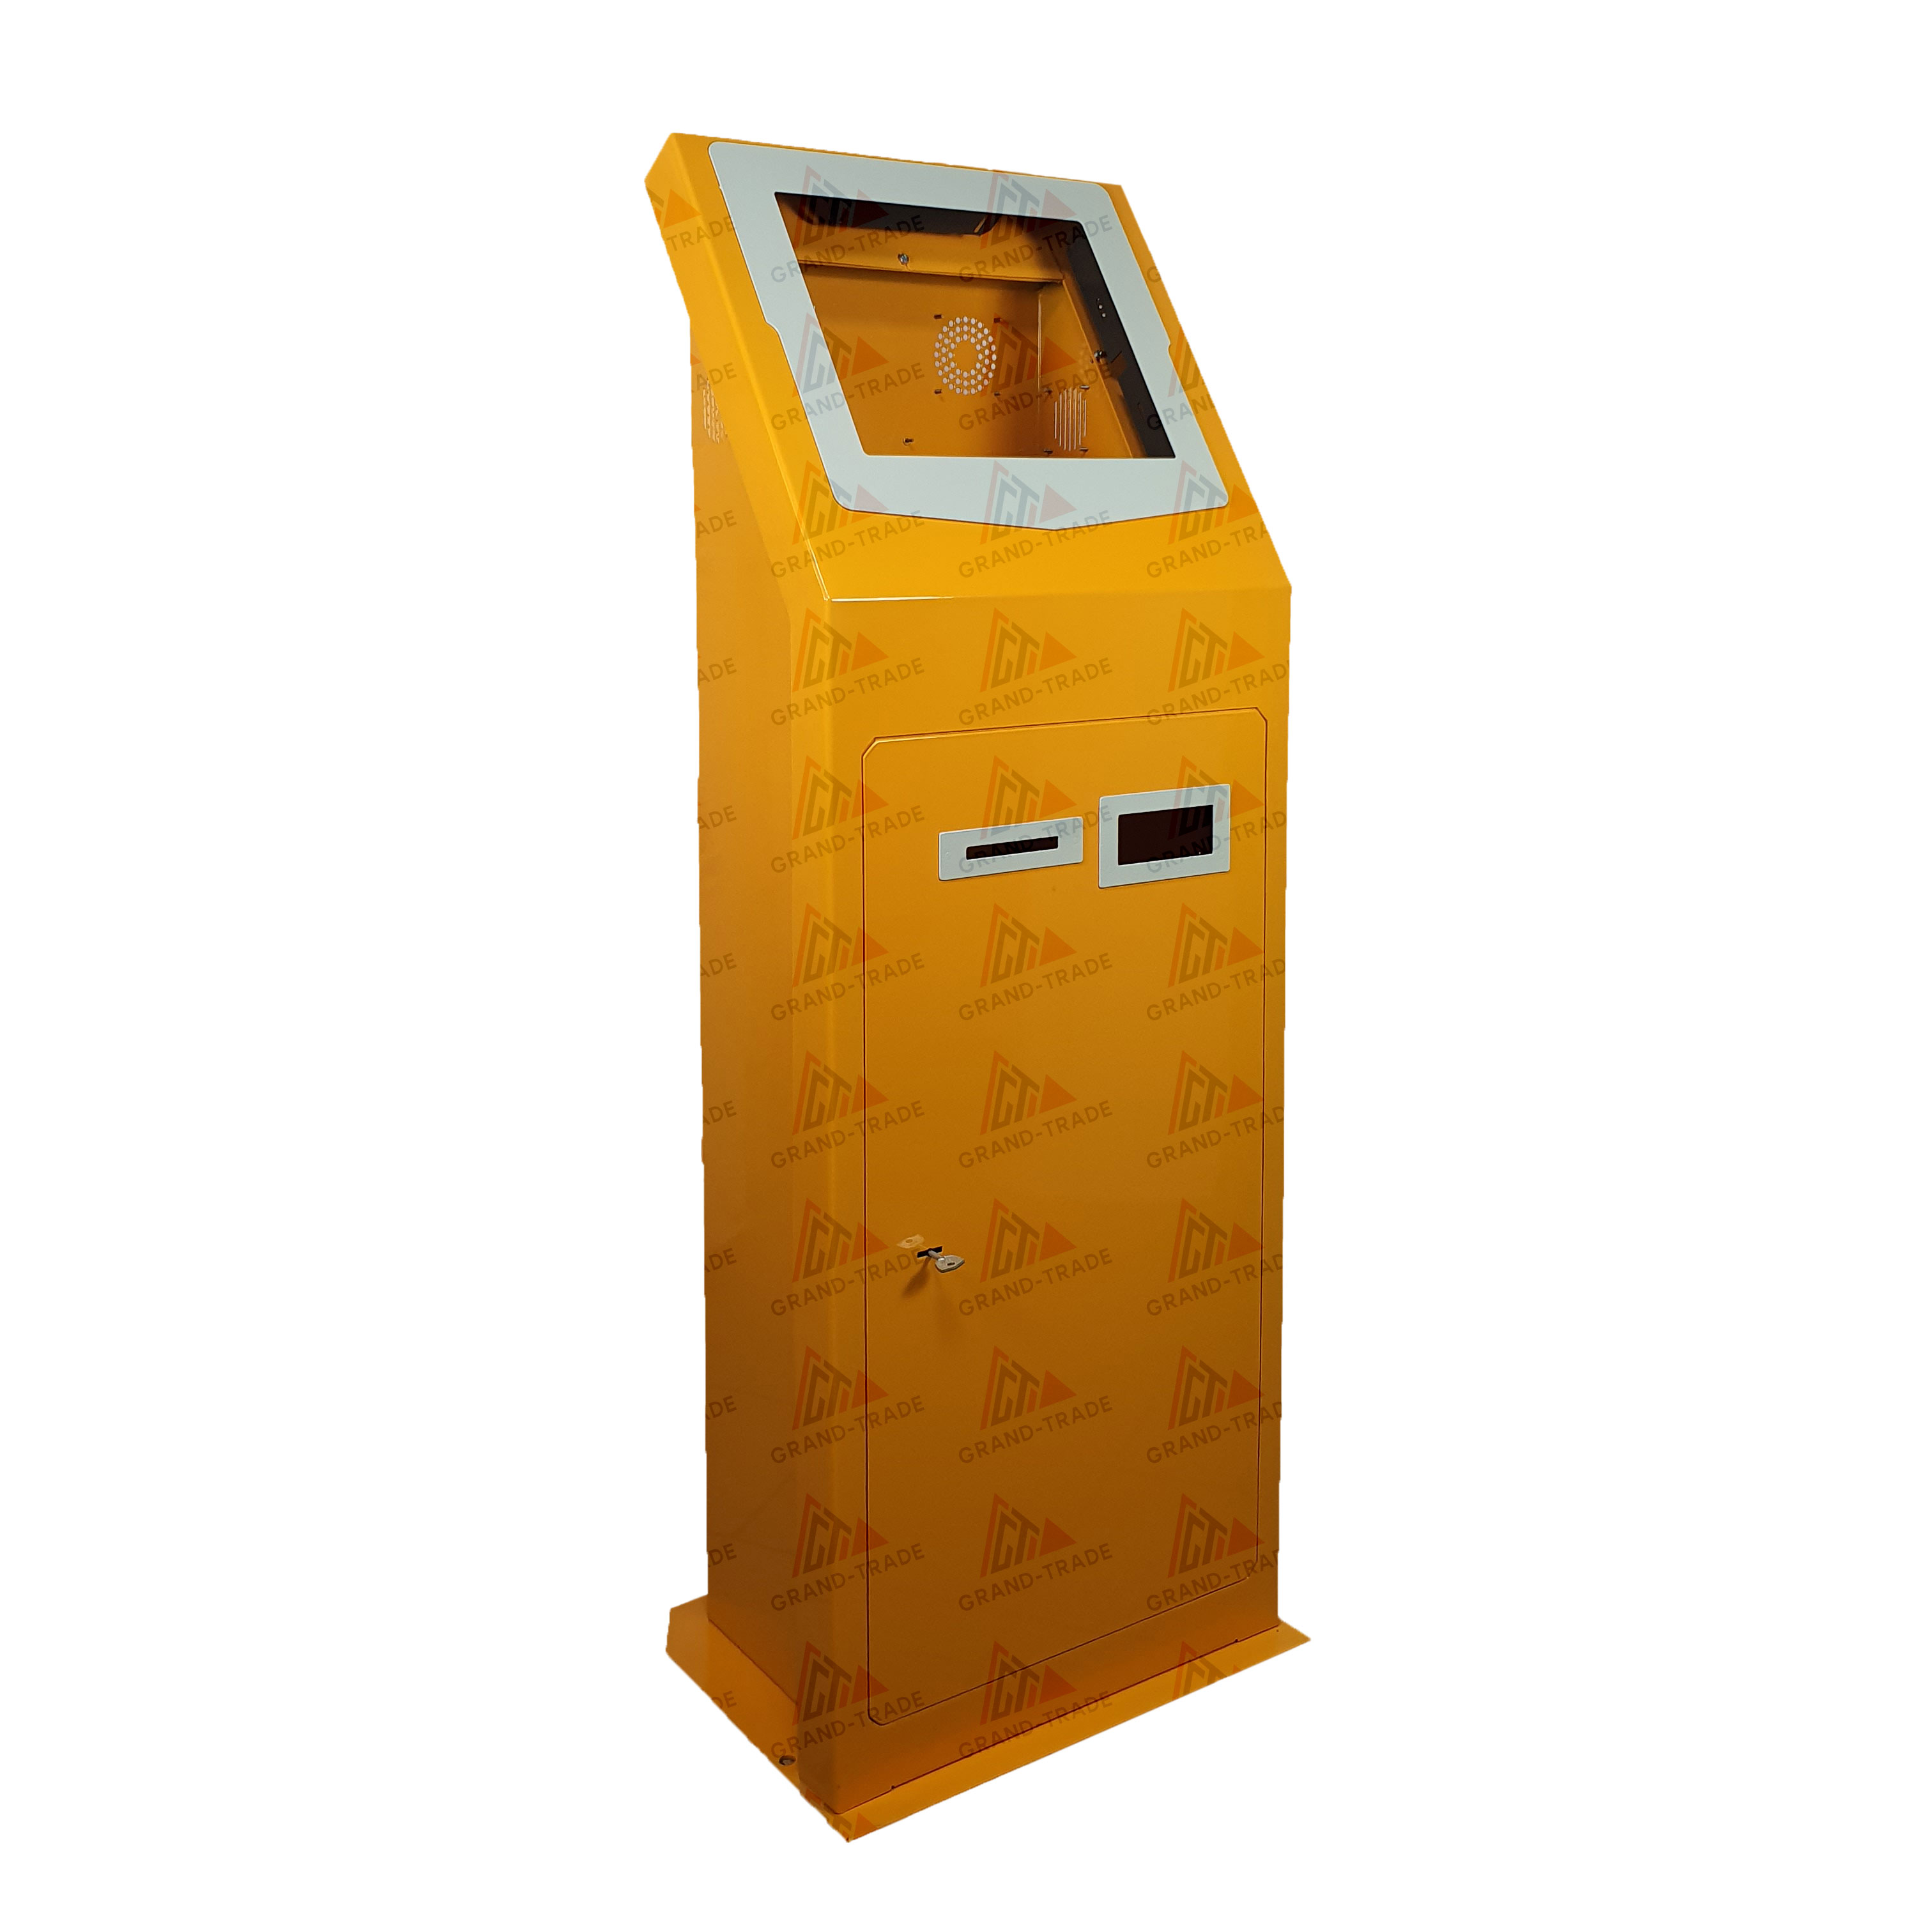 Корпус лотерейного терминала Удача (NV200 SmartPayOut)